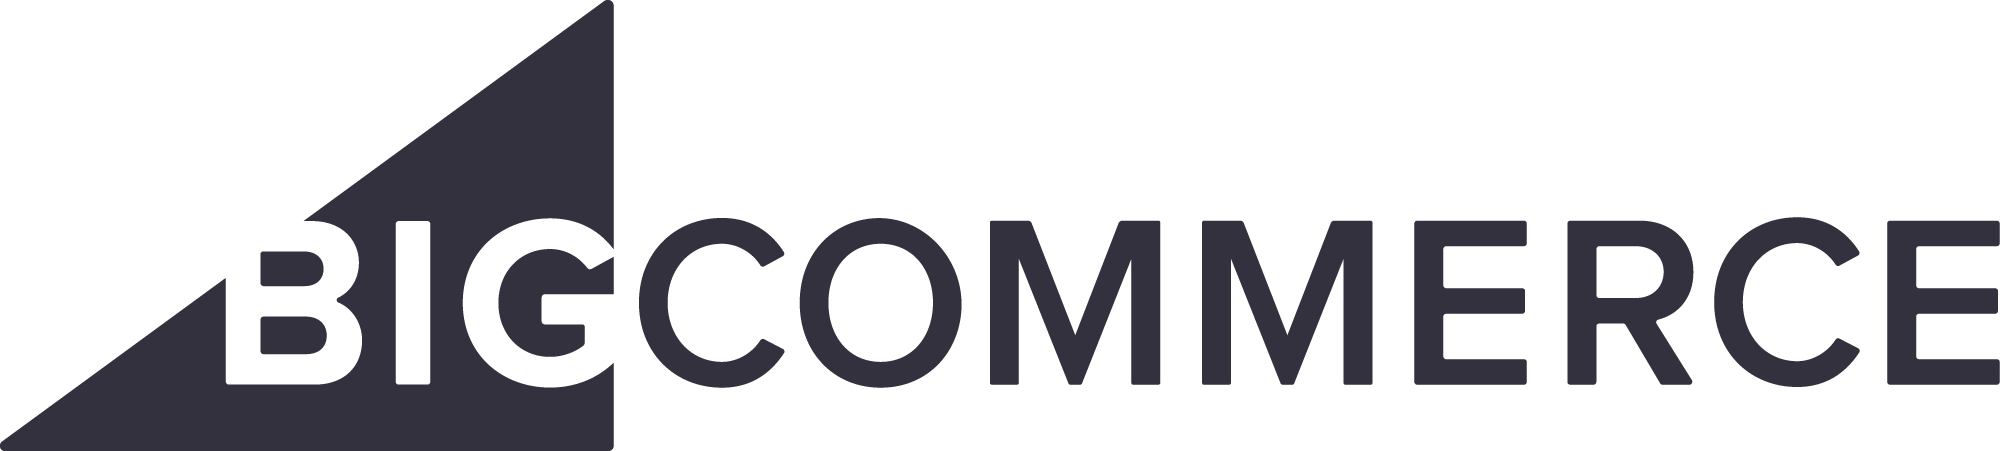 big commerce logo.png